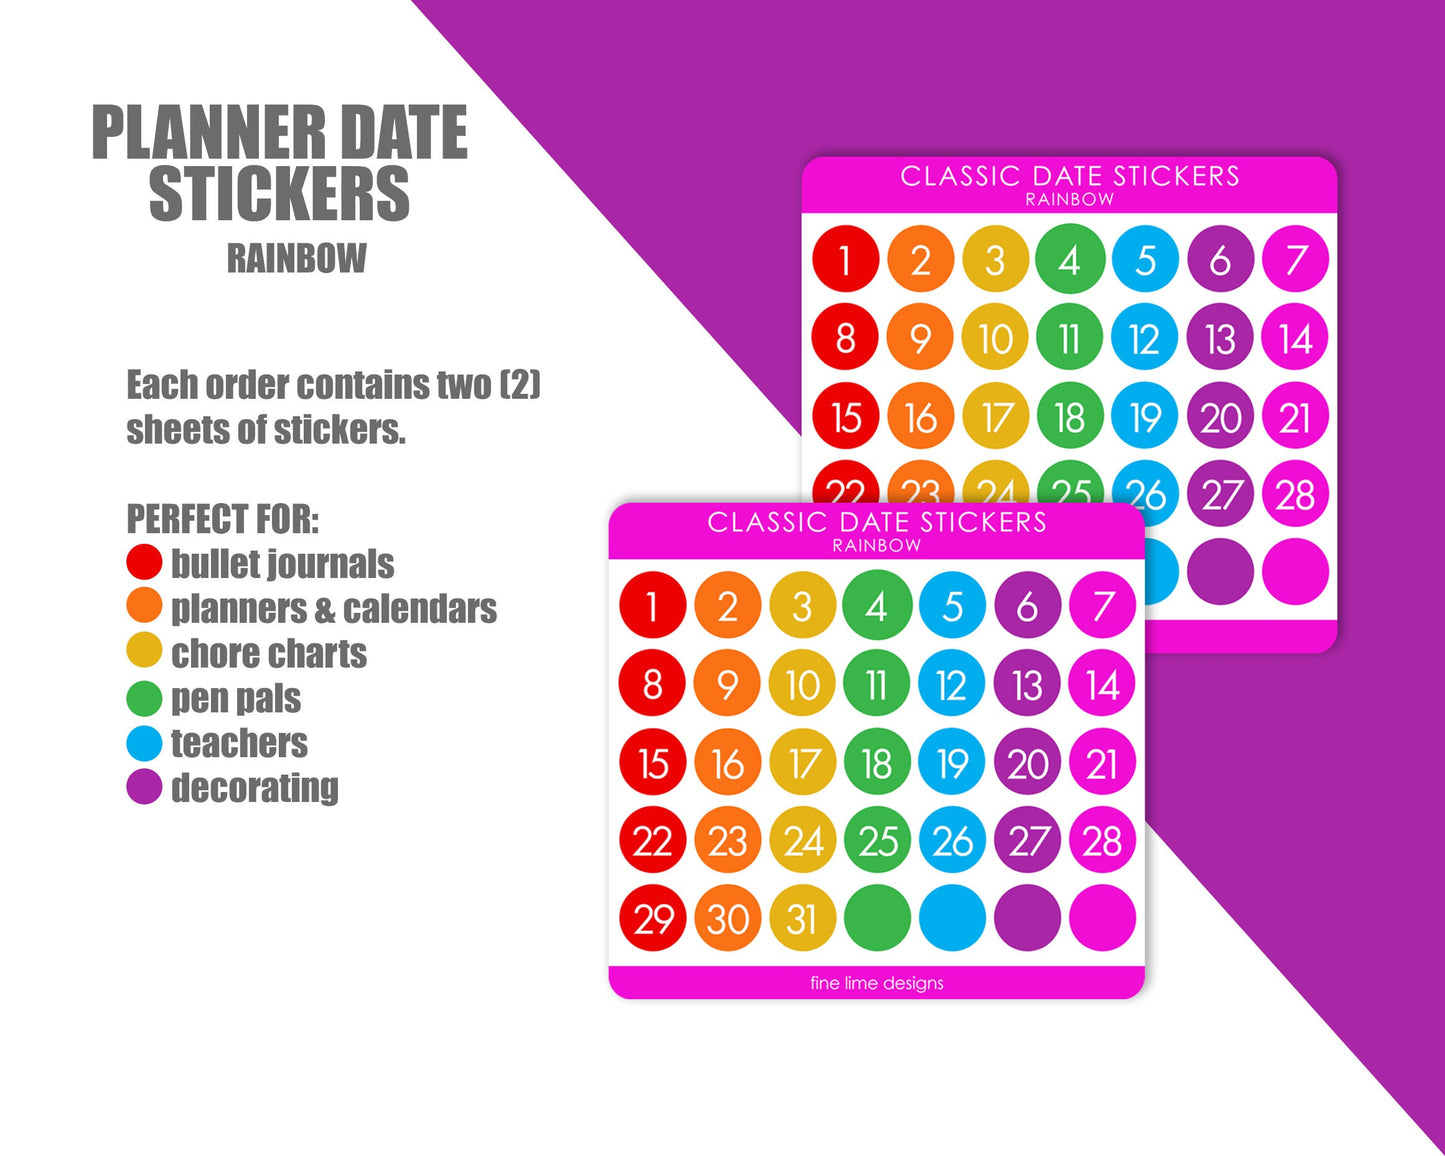 Planner Date Stickers - Rainbow